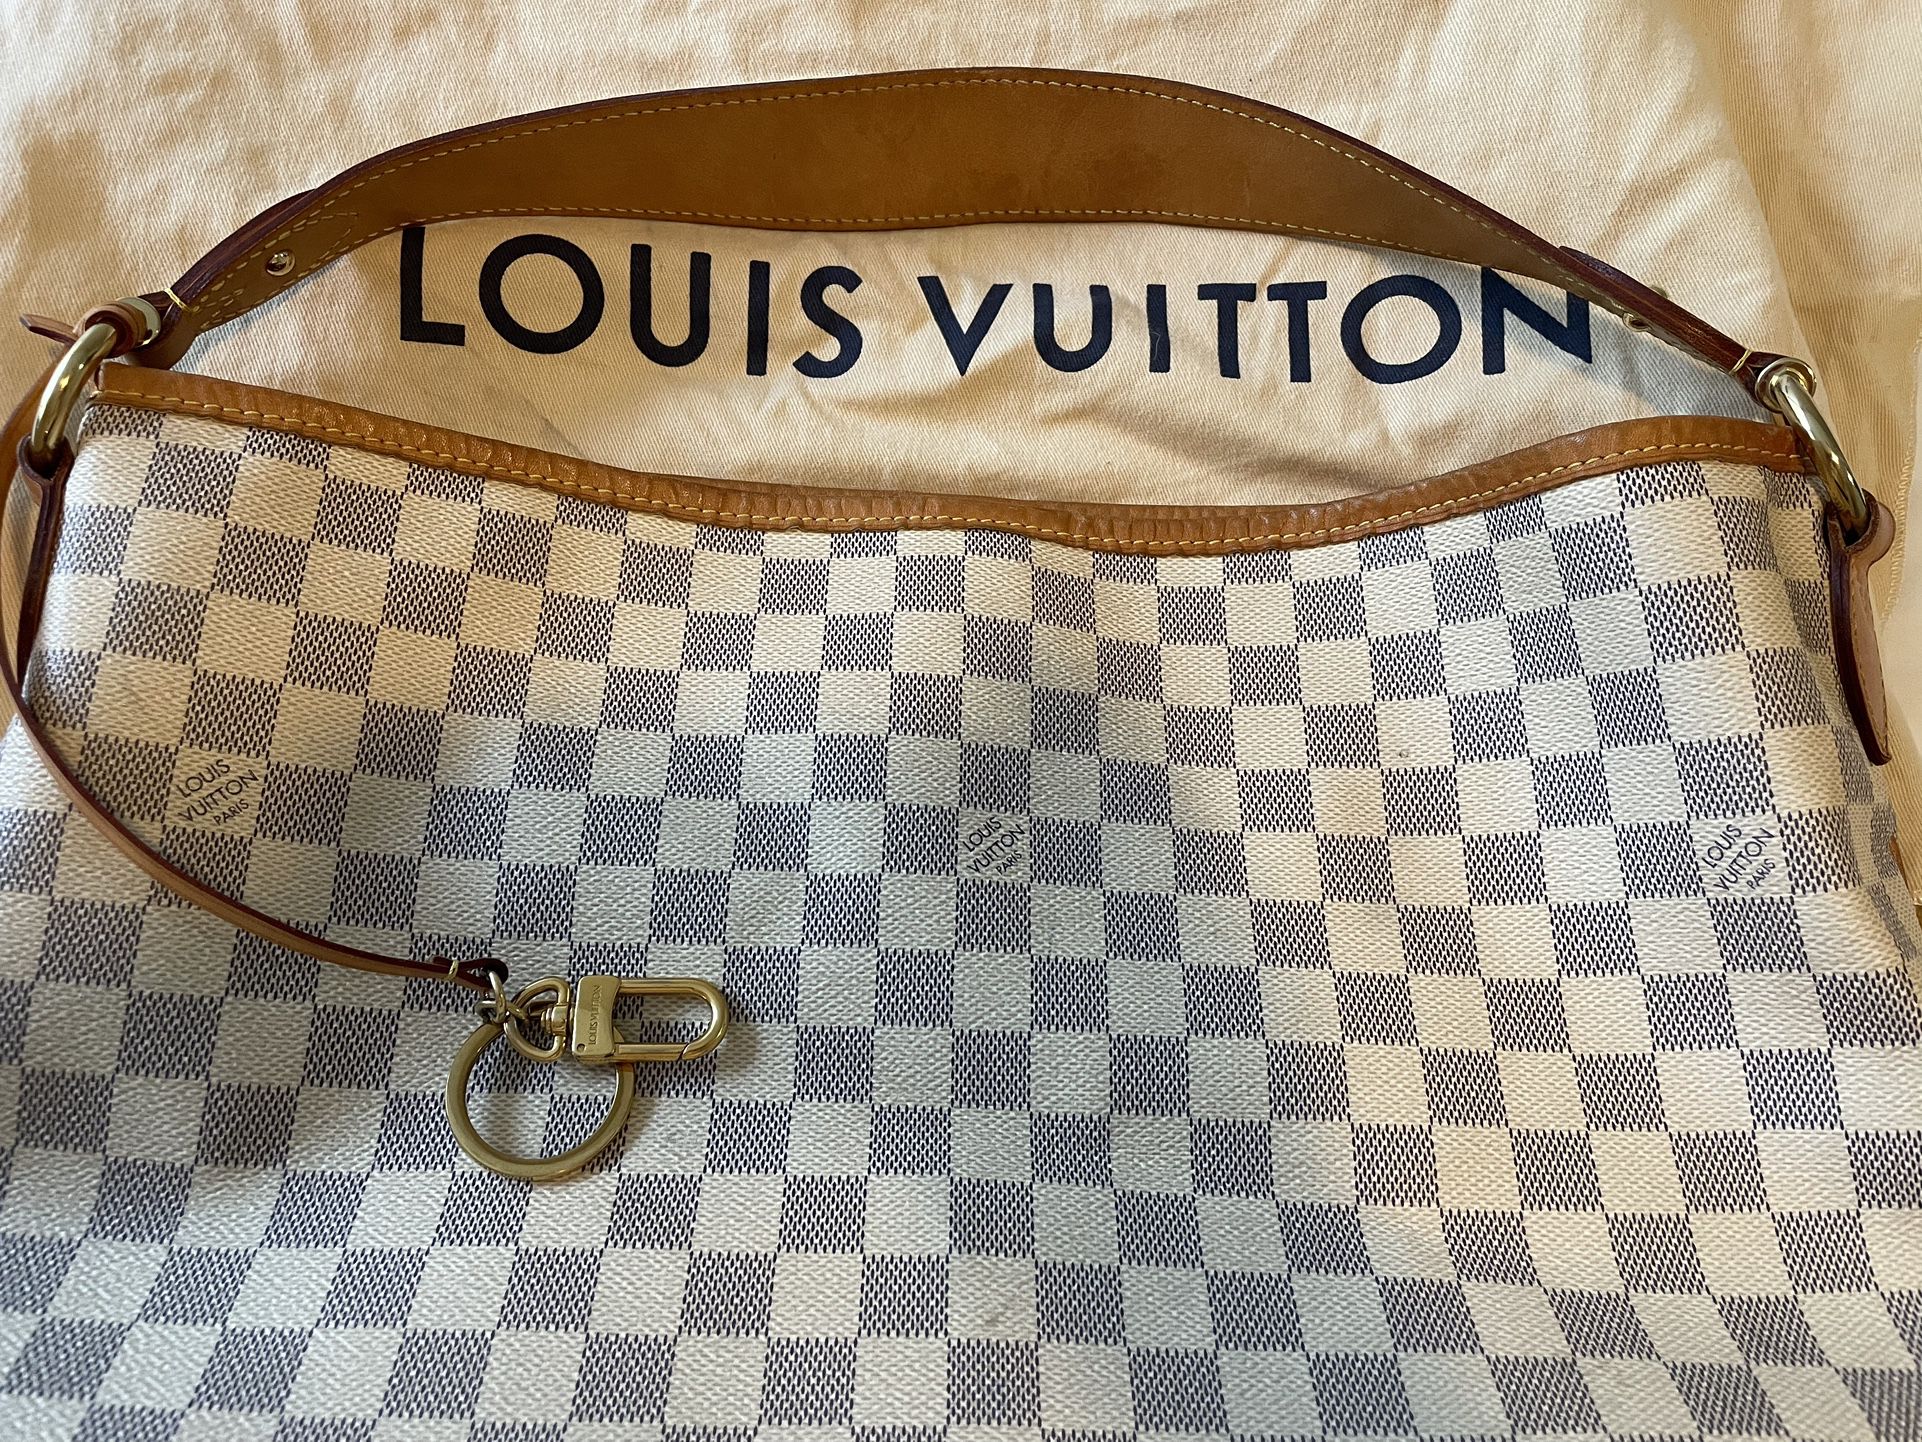 Correa Louis Vuitton Original for Sale in St. Cloud, FL - OfferUp